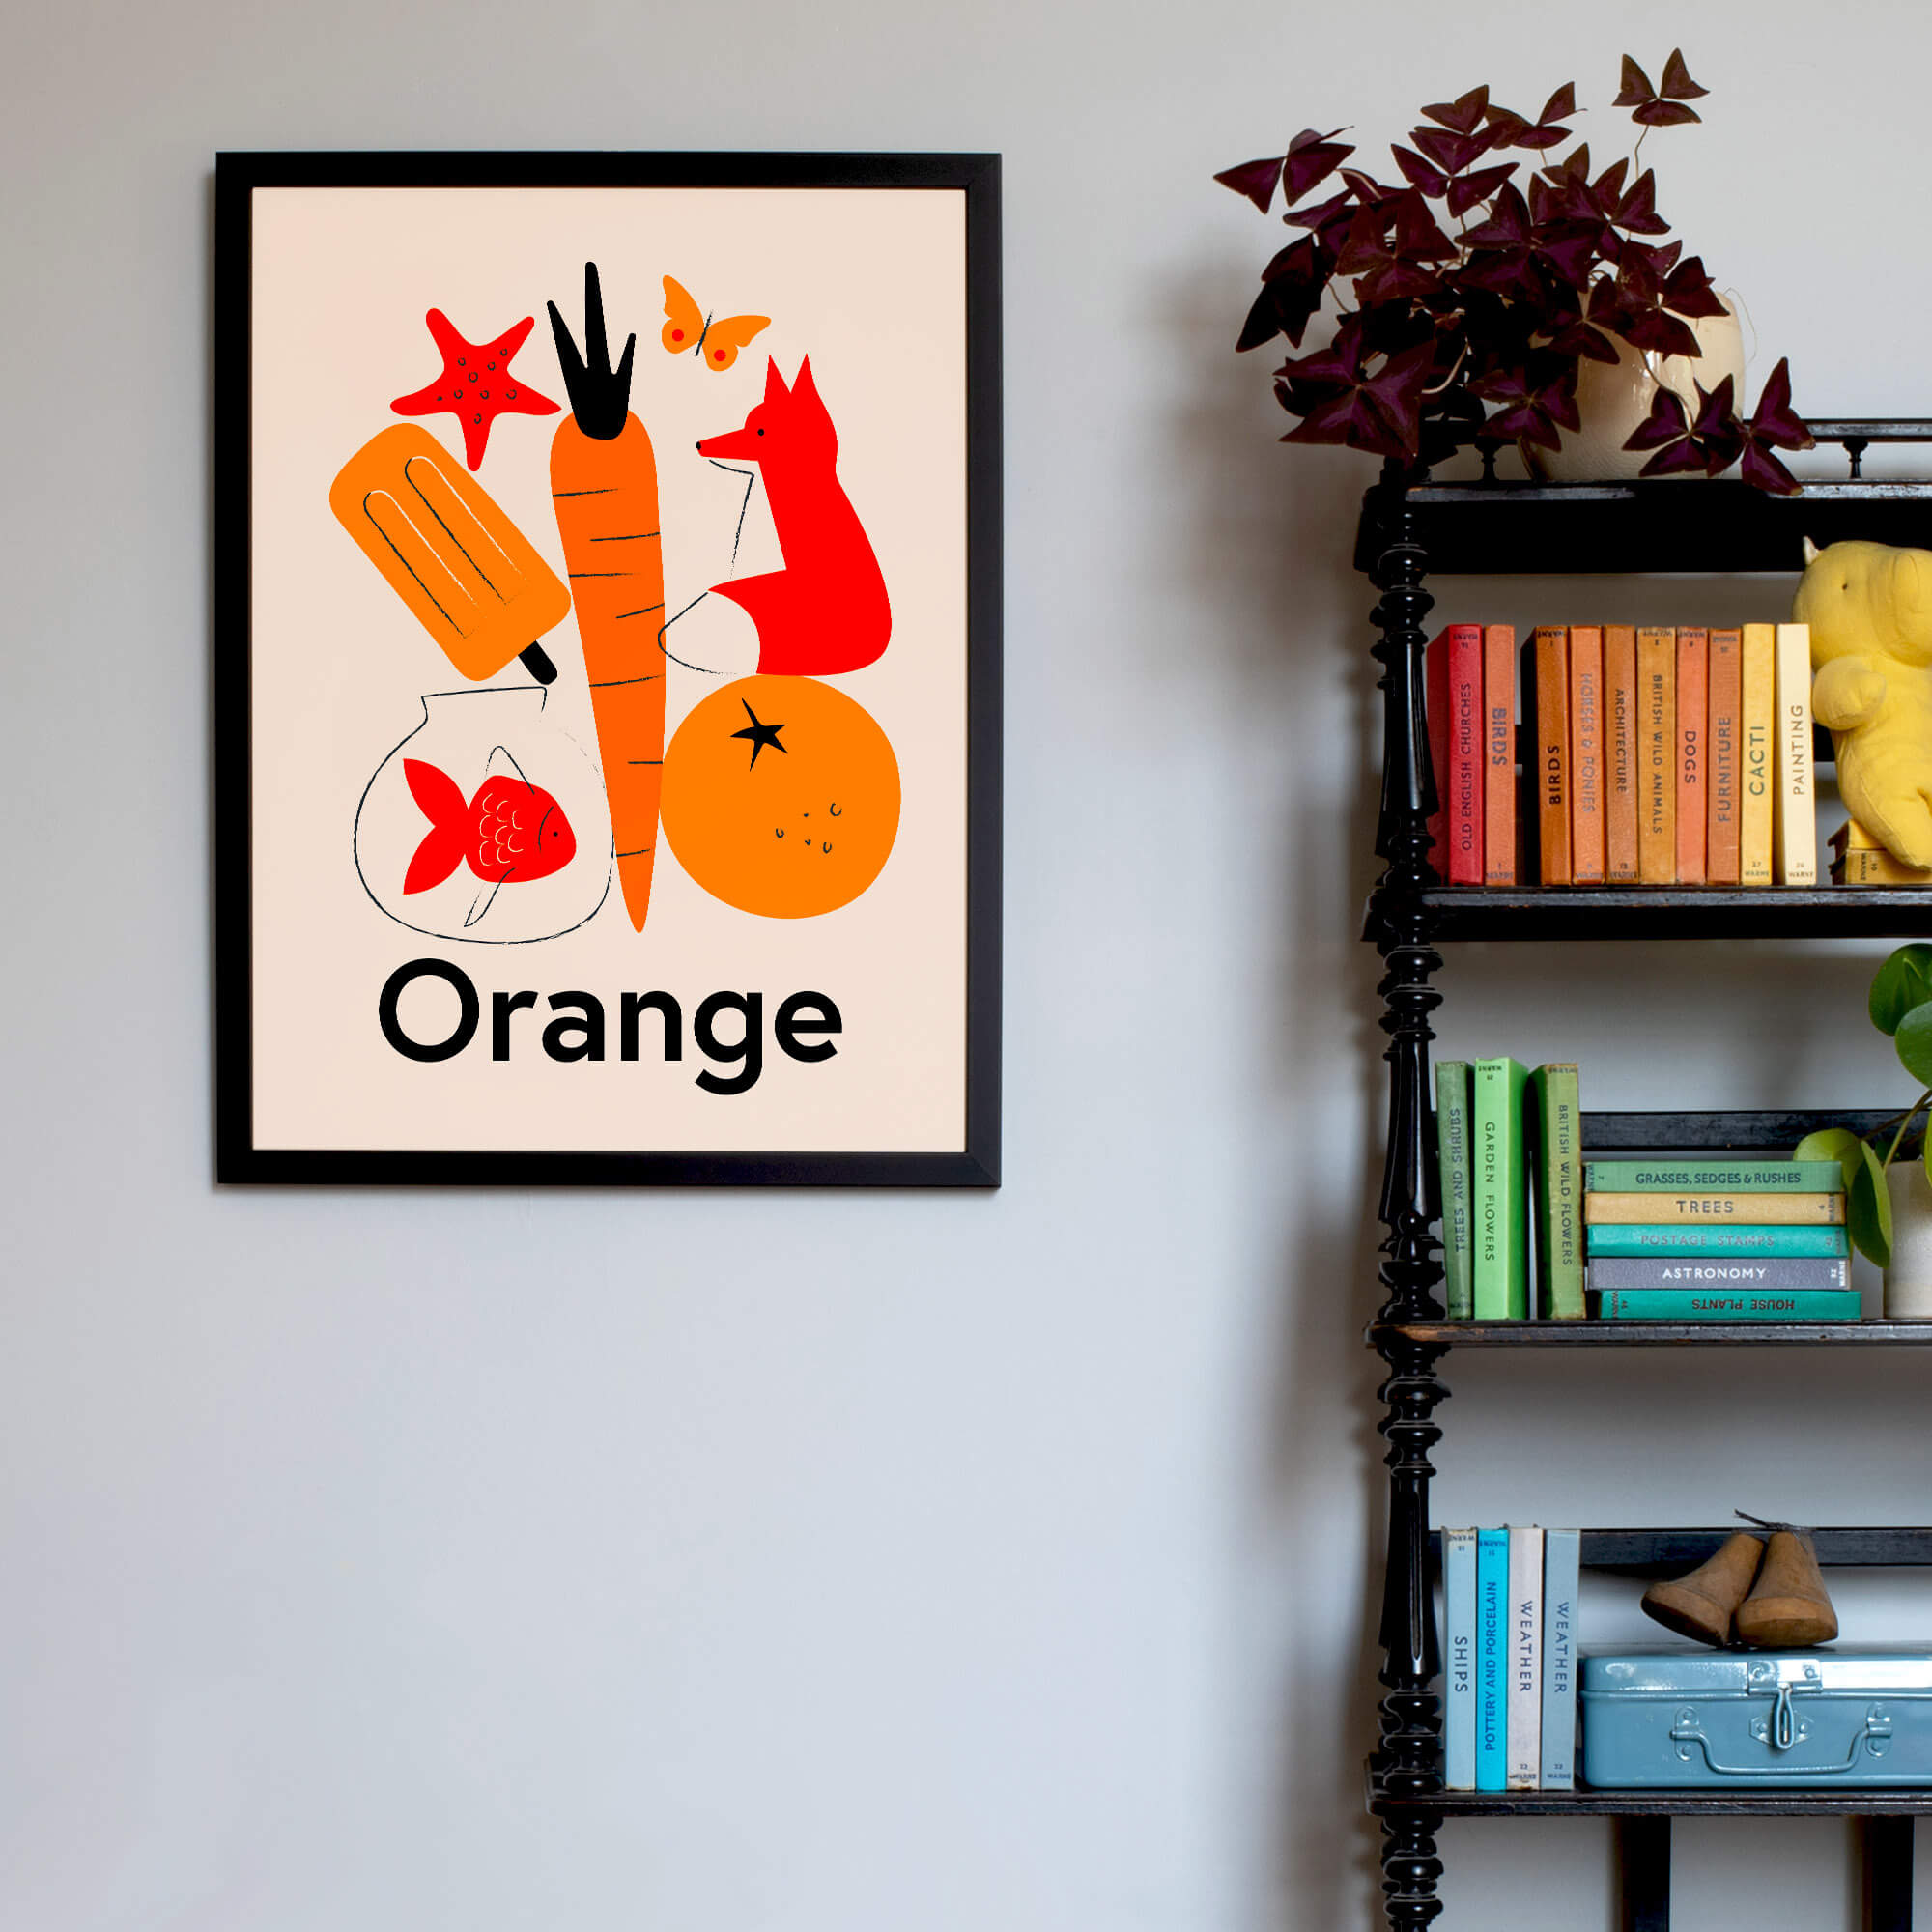 Favourite Colour Orange Framed Fine Art Print